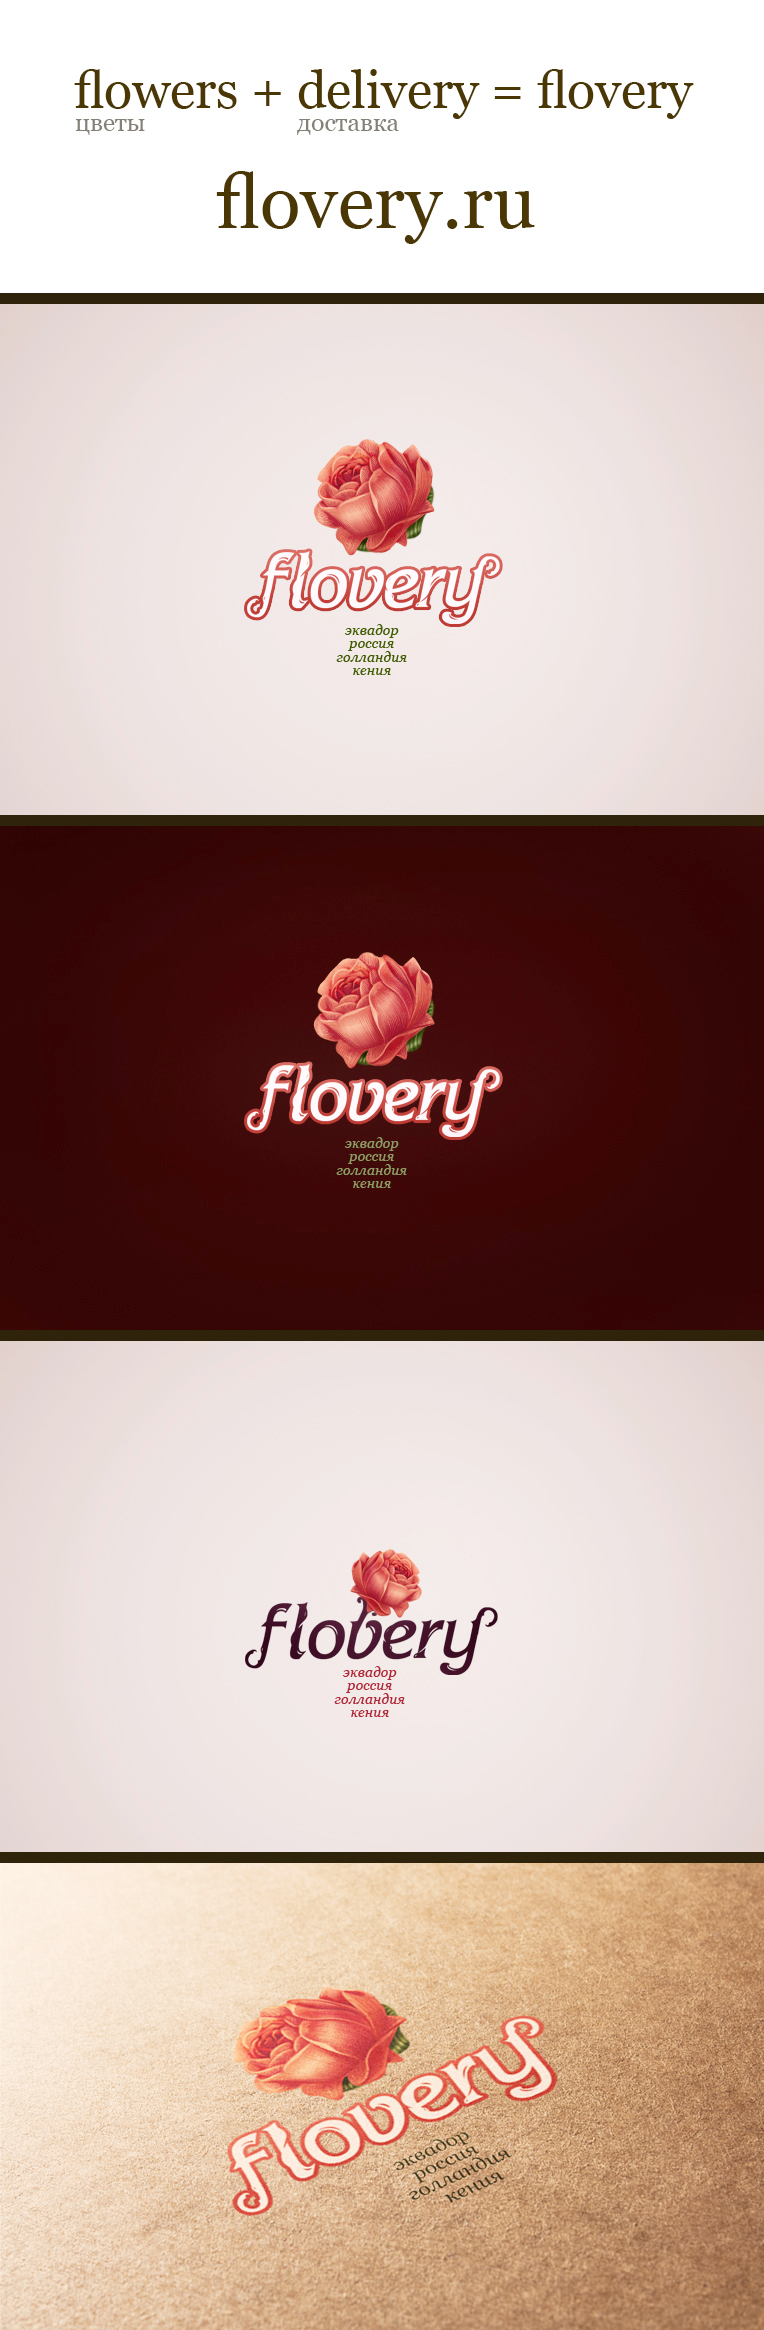 Создание логотипа цветочного бренда «Flovery»